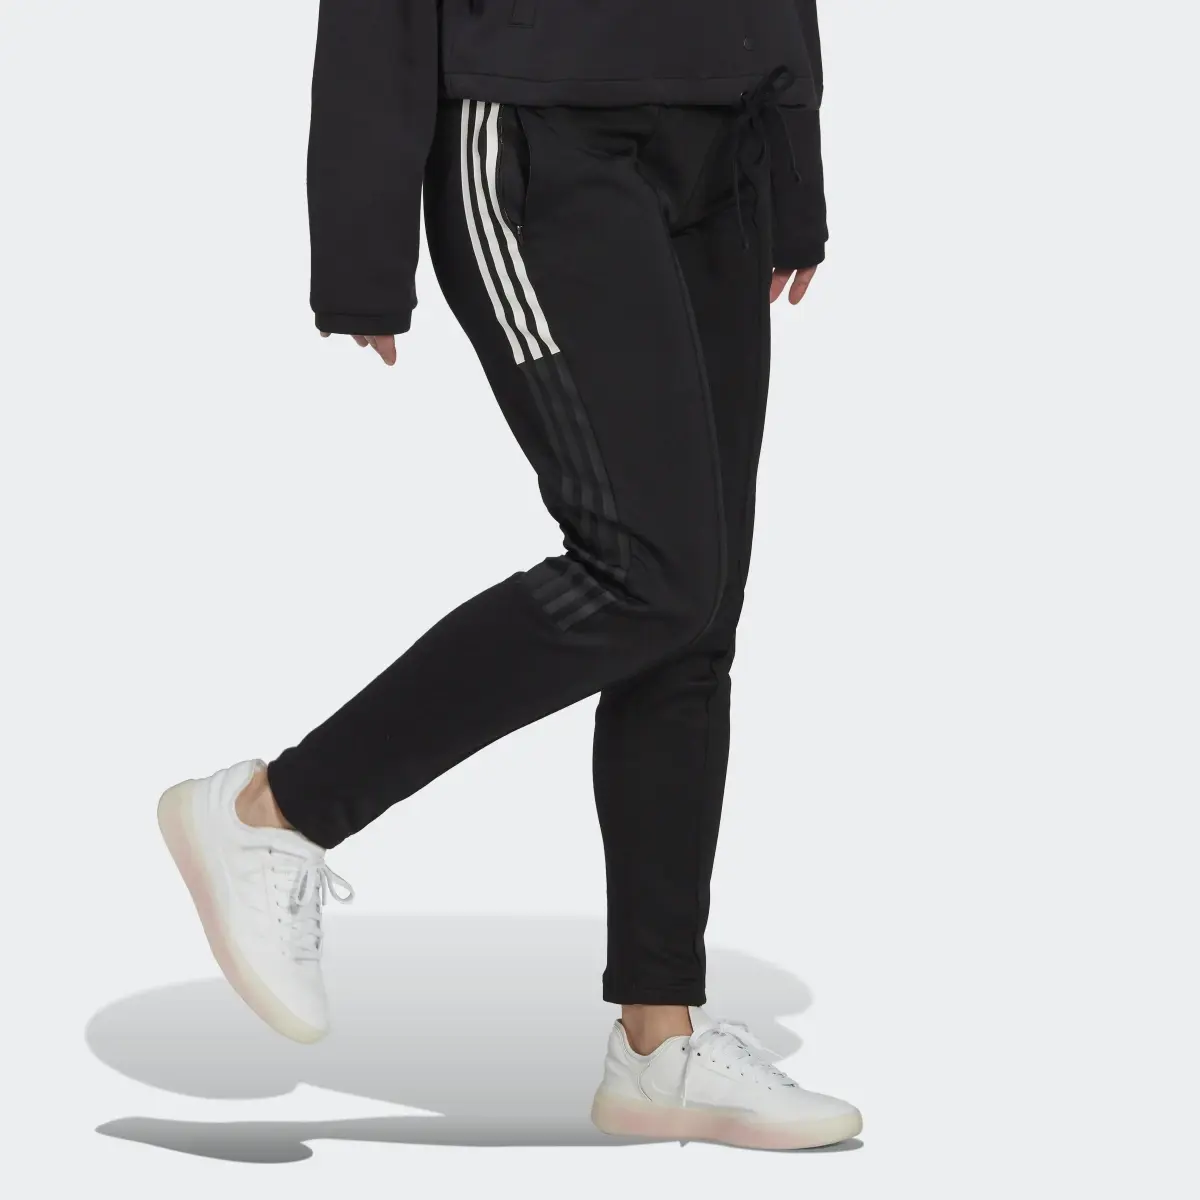 Adidas Tricot Pants. 3